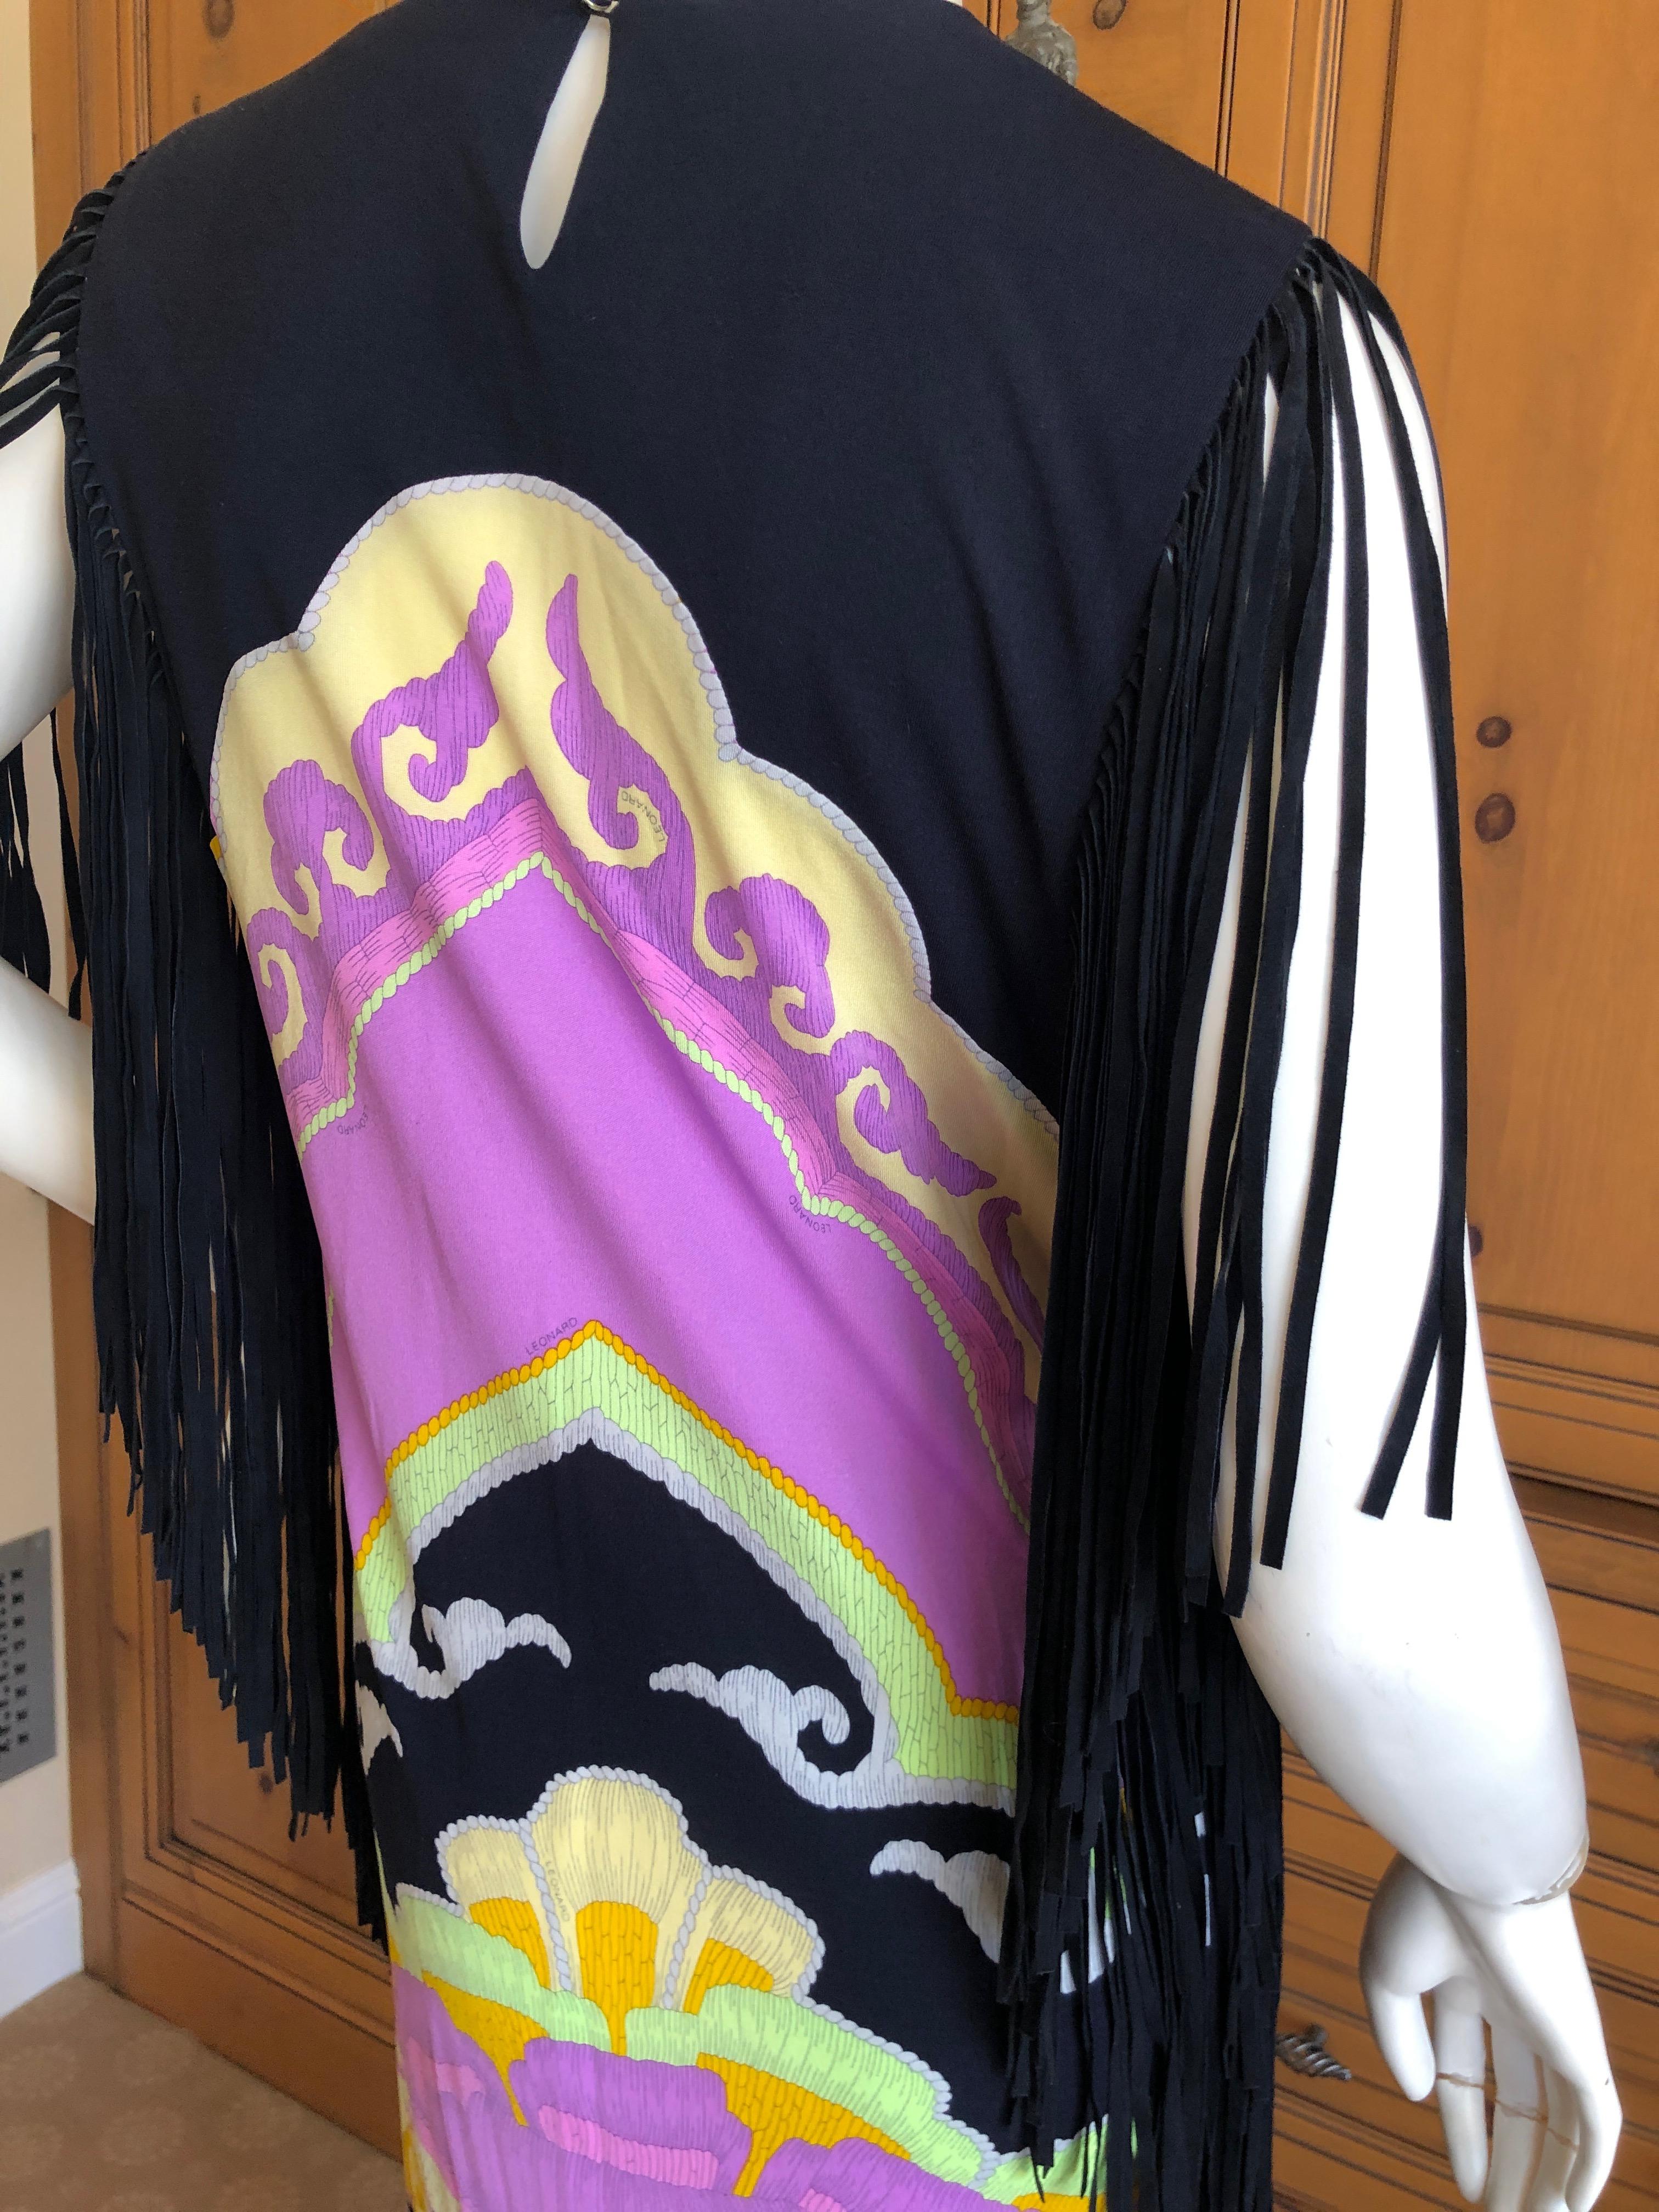 Leonard Paris Vintage Silk Jersey Sleeveless Dress with Suede Fringe Details For Sale 1